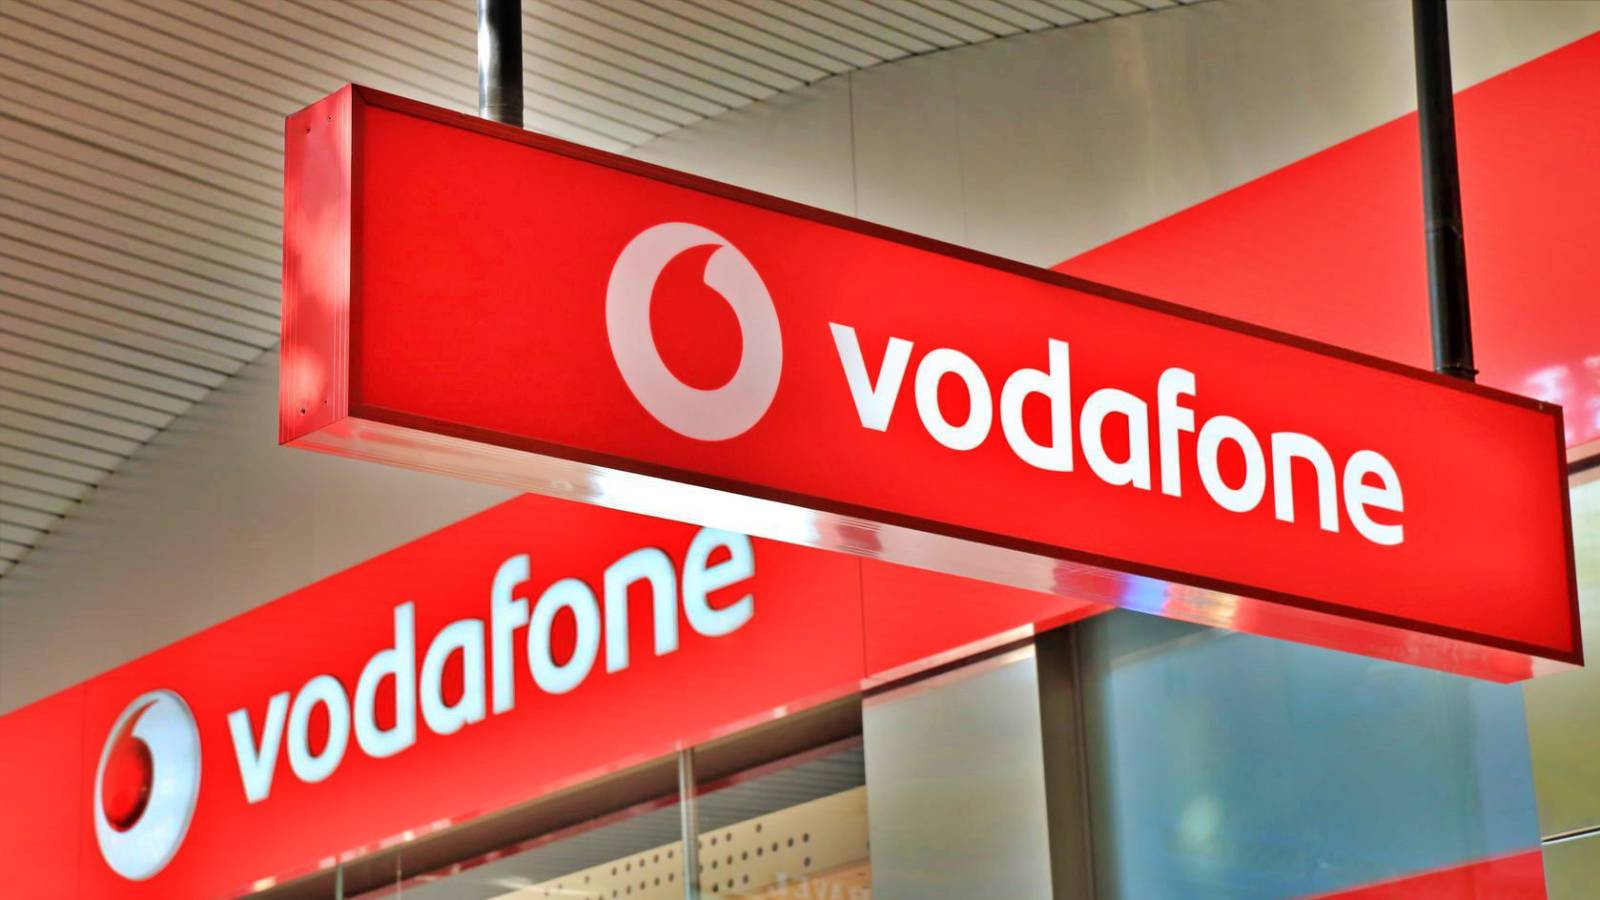 Vodafone Customer Notification Offers FREE Romanians